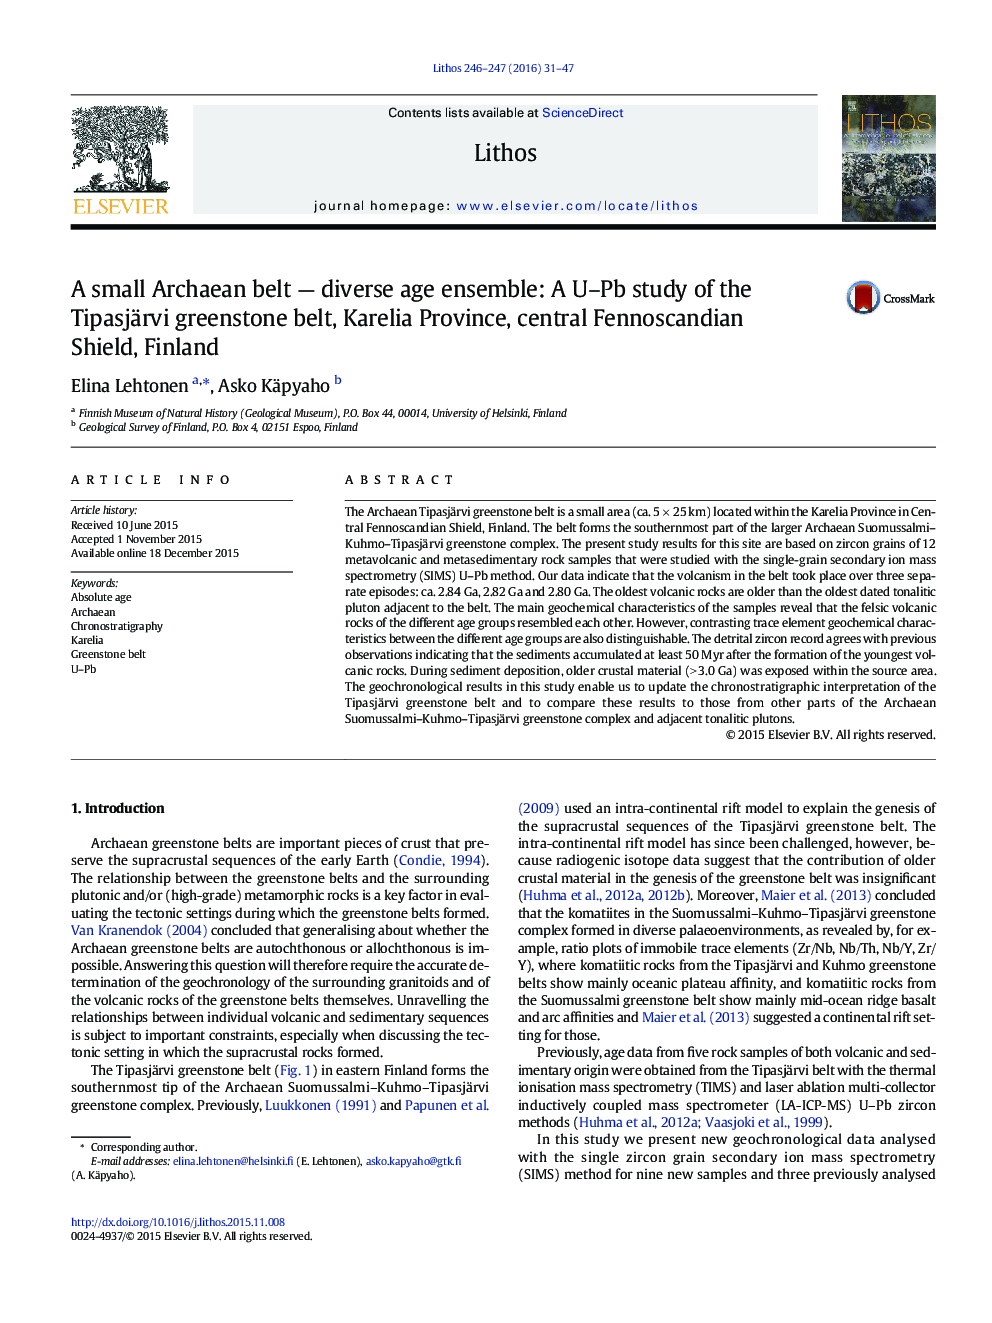 A small Archaean belt - diverse age ensemble: A U-Pb study of the Tipasjärvi greenstone belt, Karelia Province, central Fennoscandian Shield, Finland